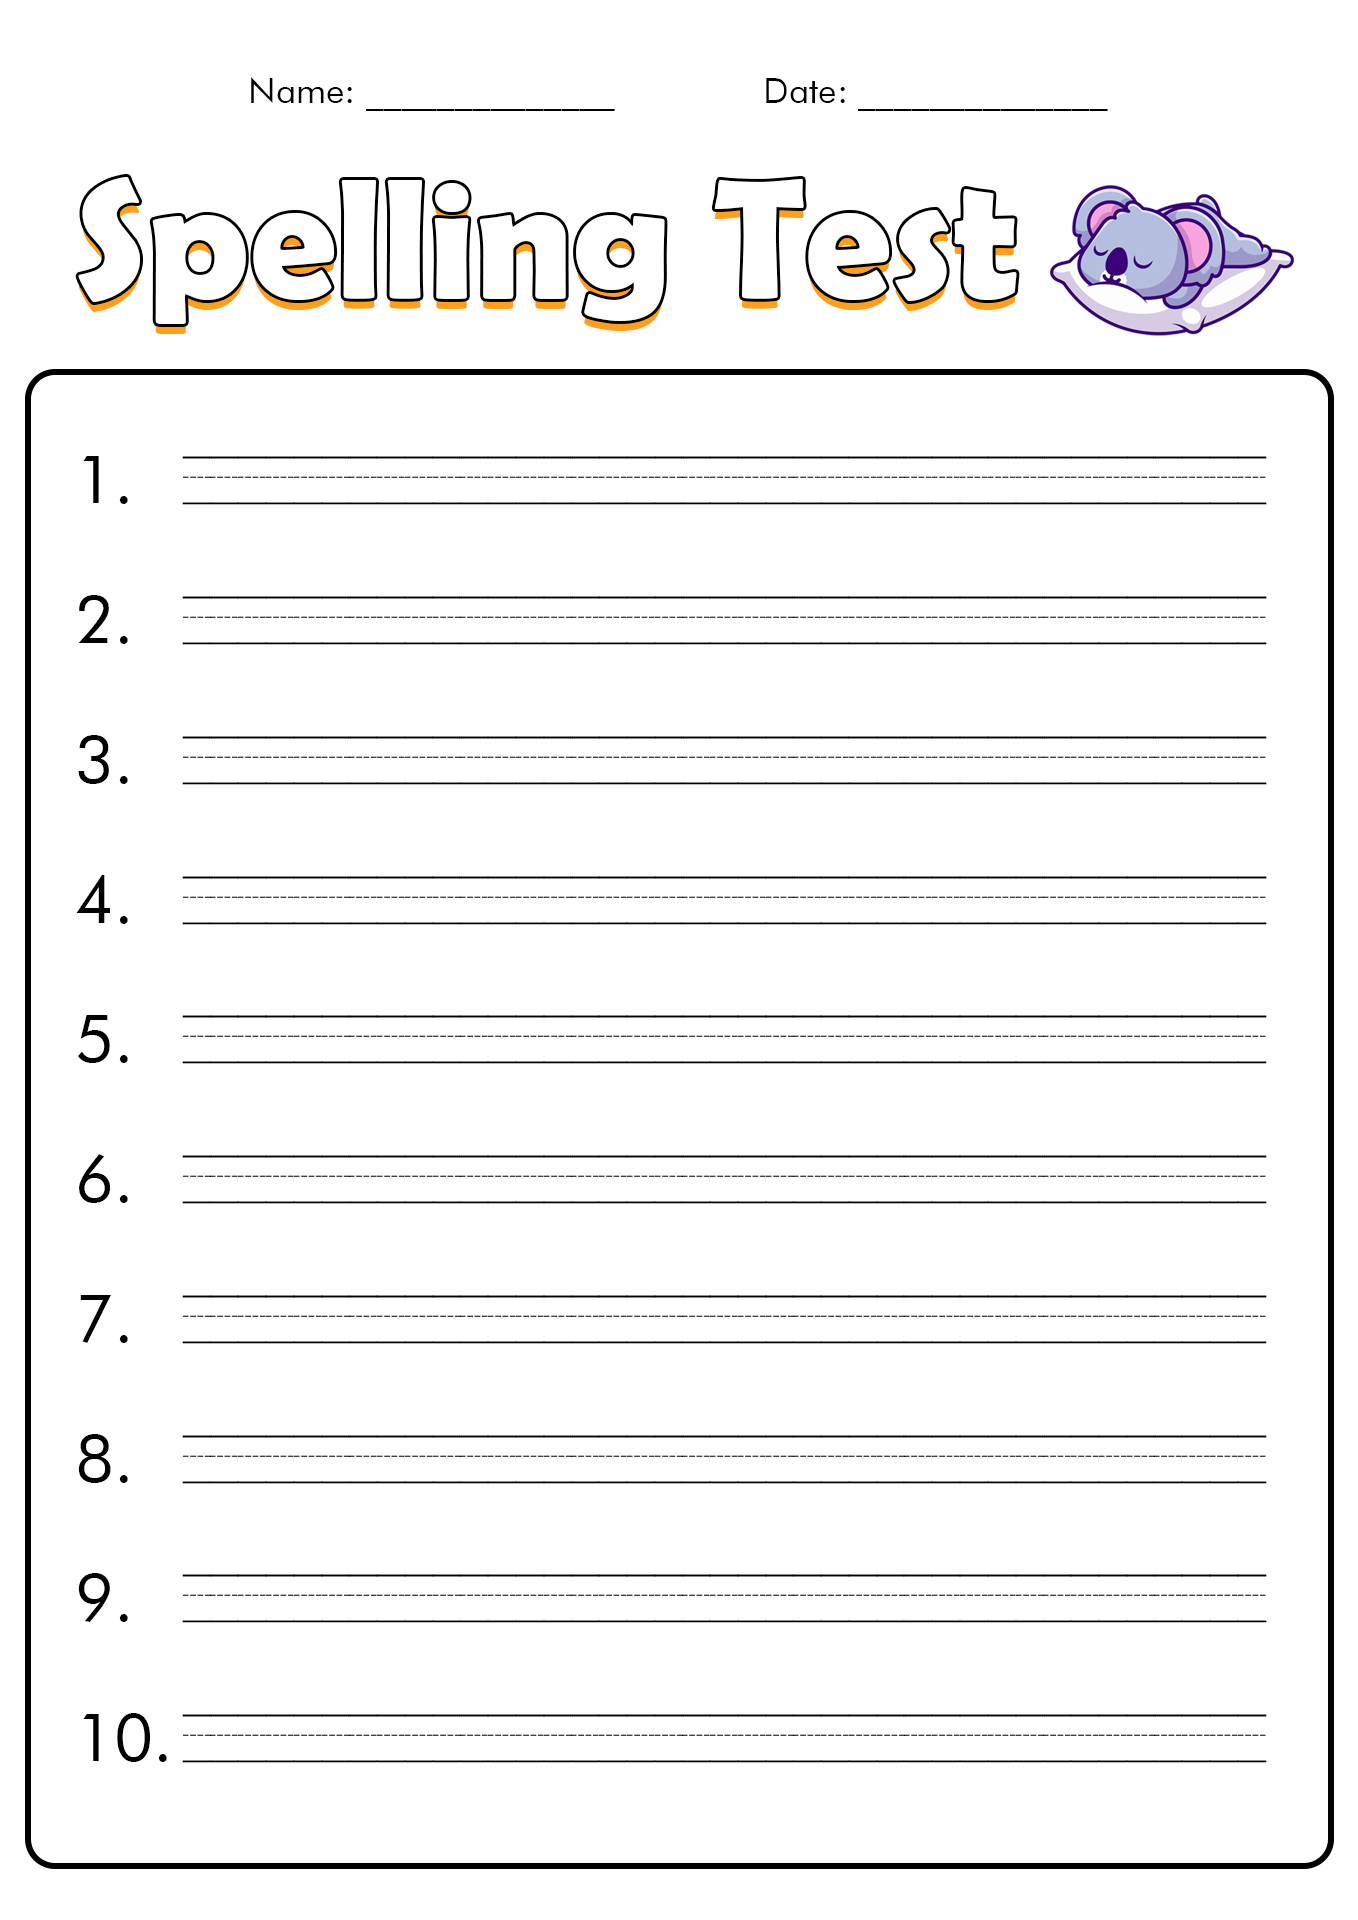 10 Best Images of Free Printable Spelling Test Worksheets Printable